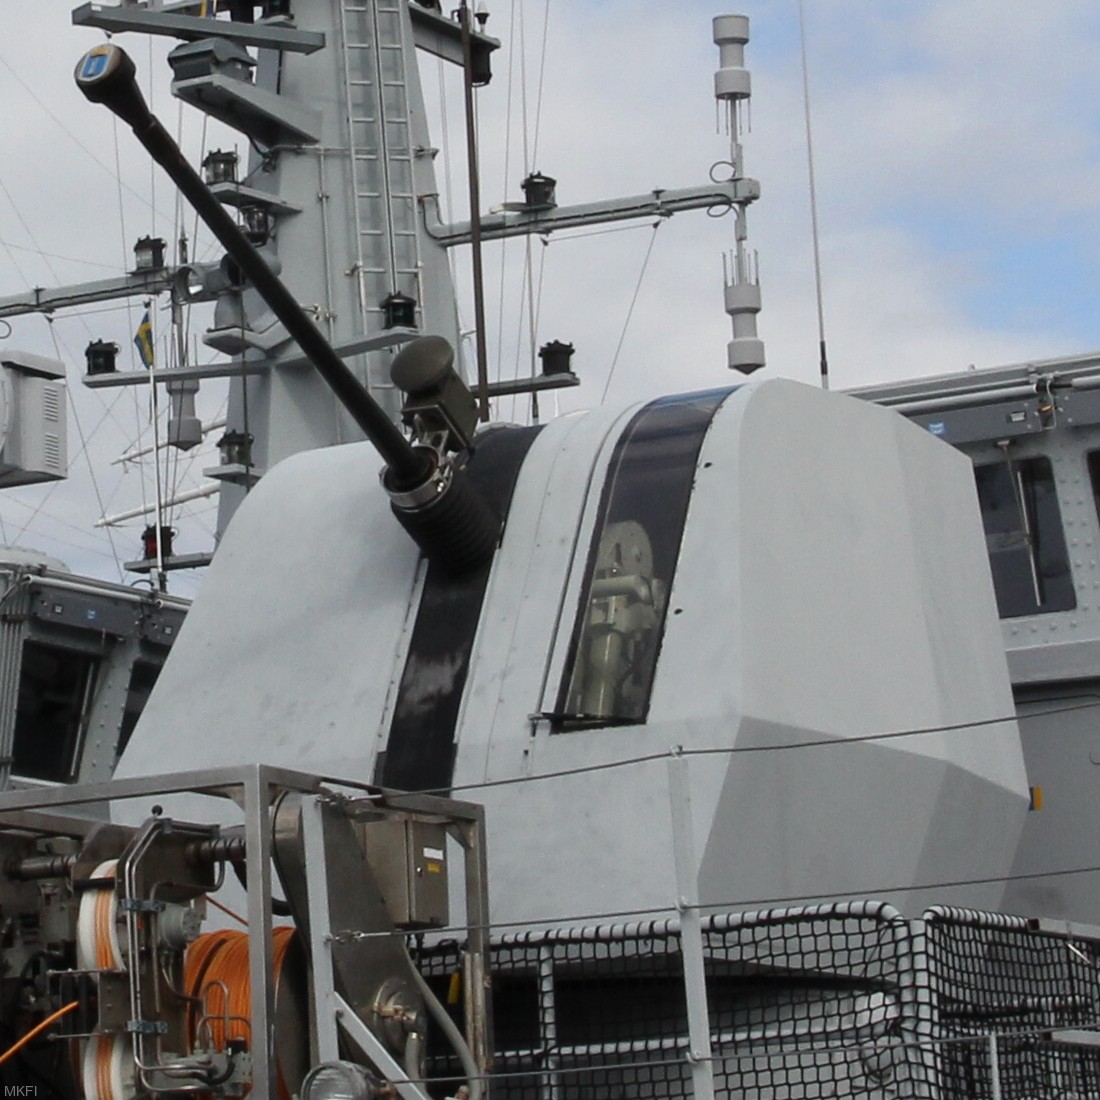 bofors 40/l70 aa naval gun 40mm 70-caliber automatic bae systems navy ship 07